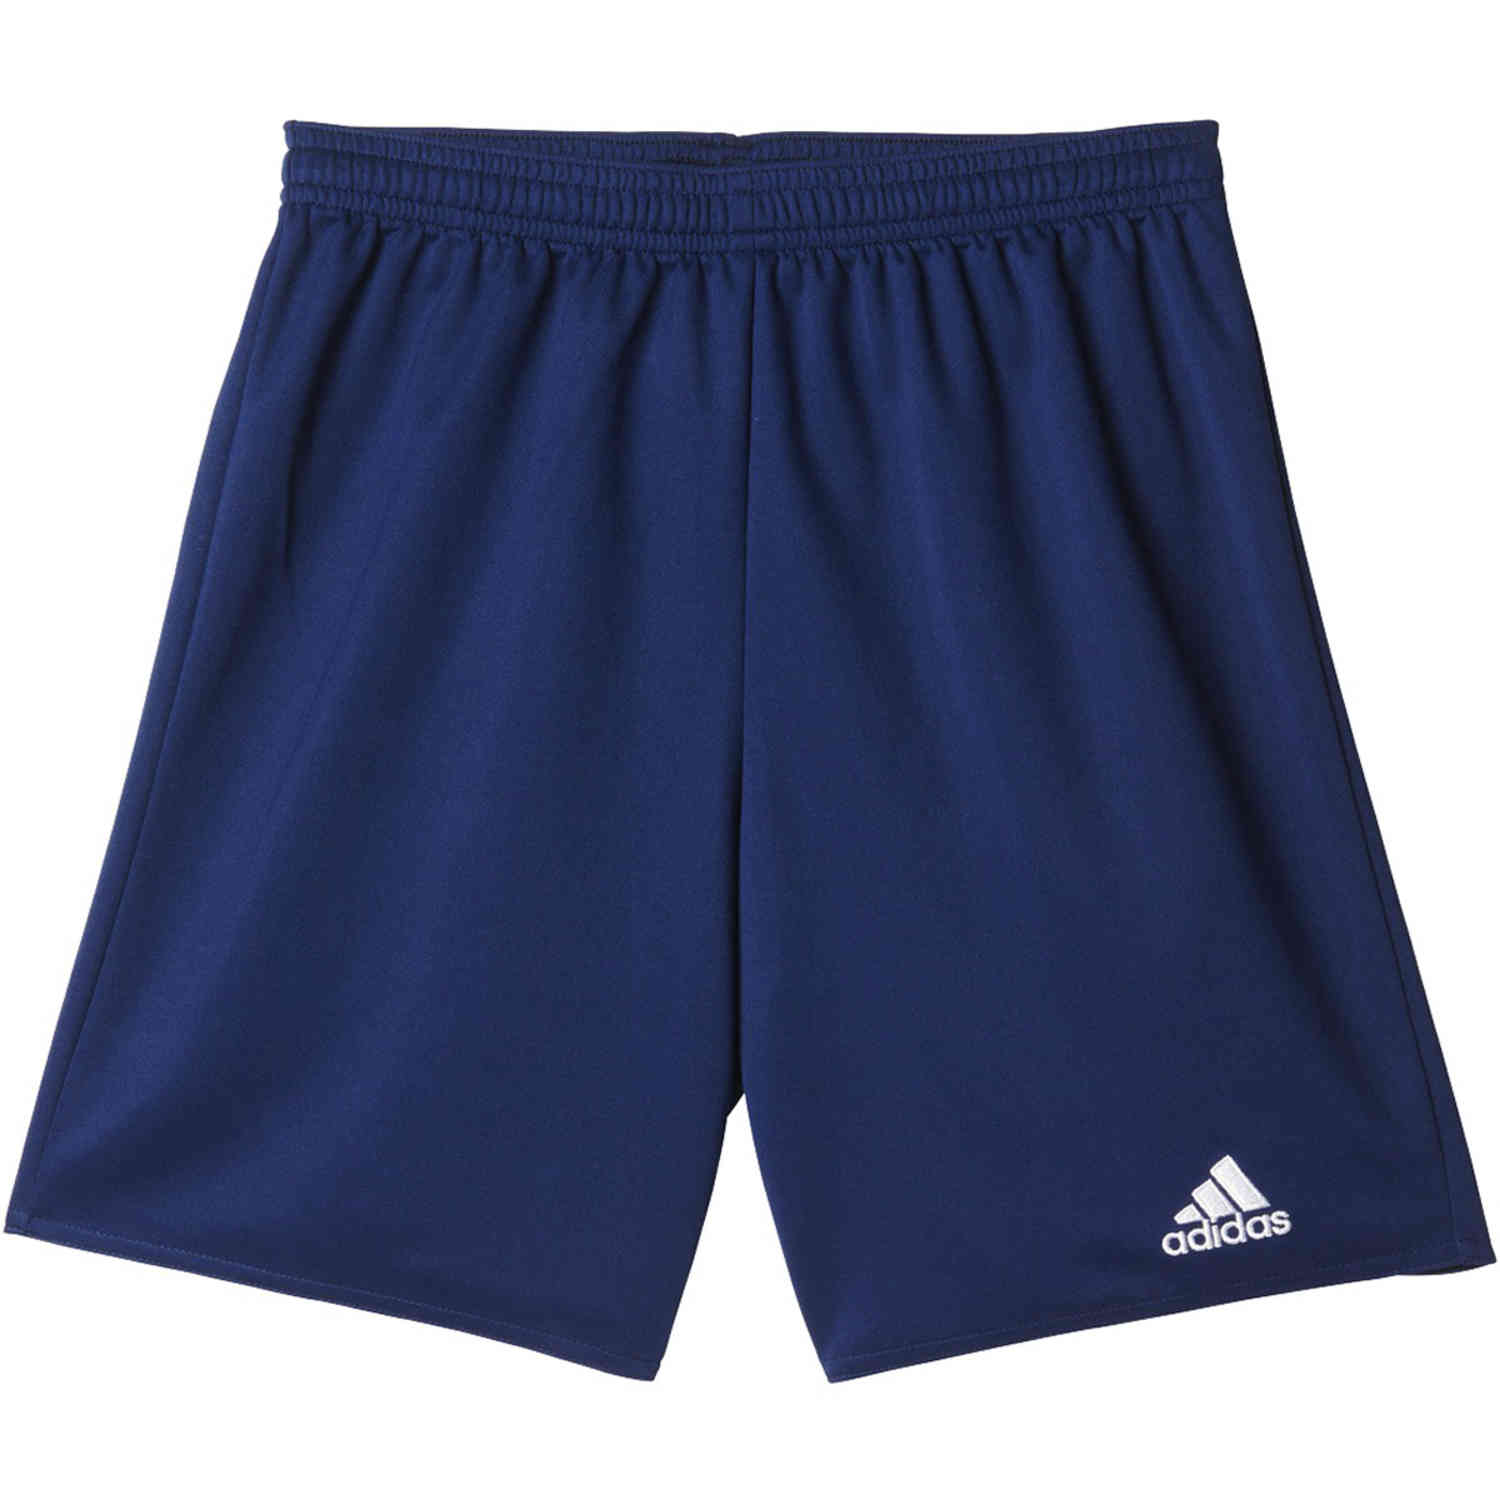 Kids adidas Parma 16 Shorts Dark Blue - SoccerPro